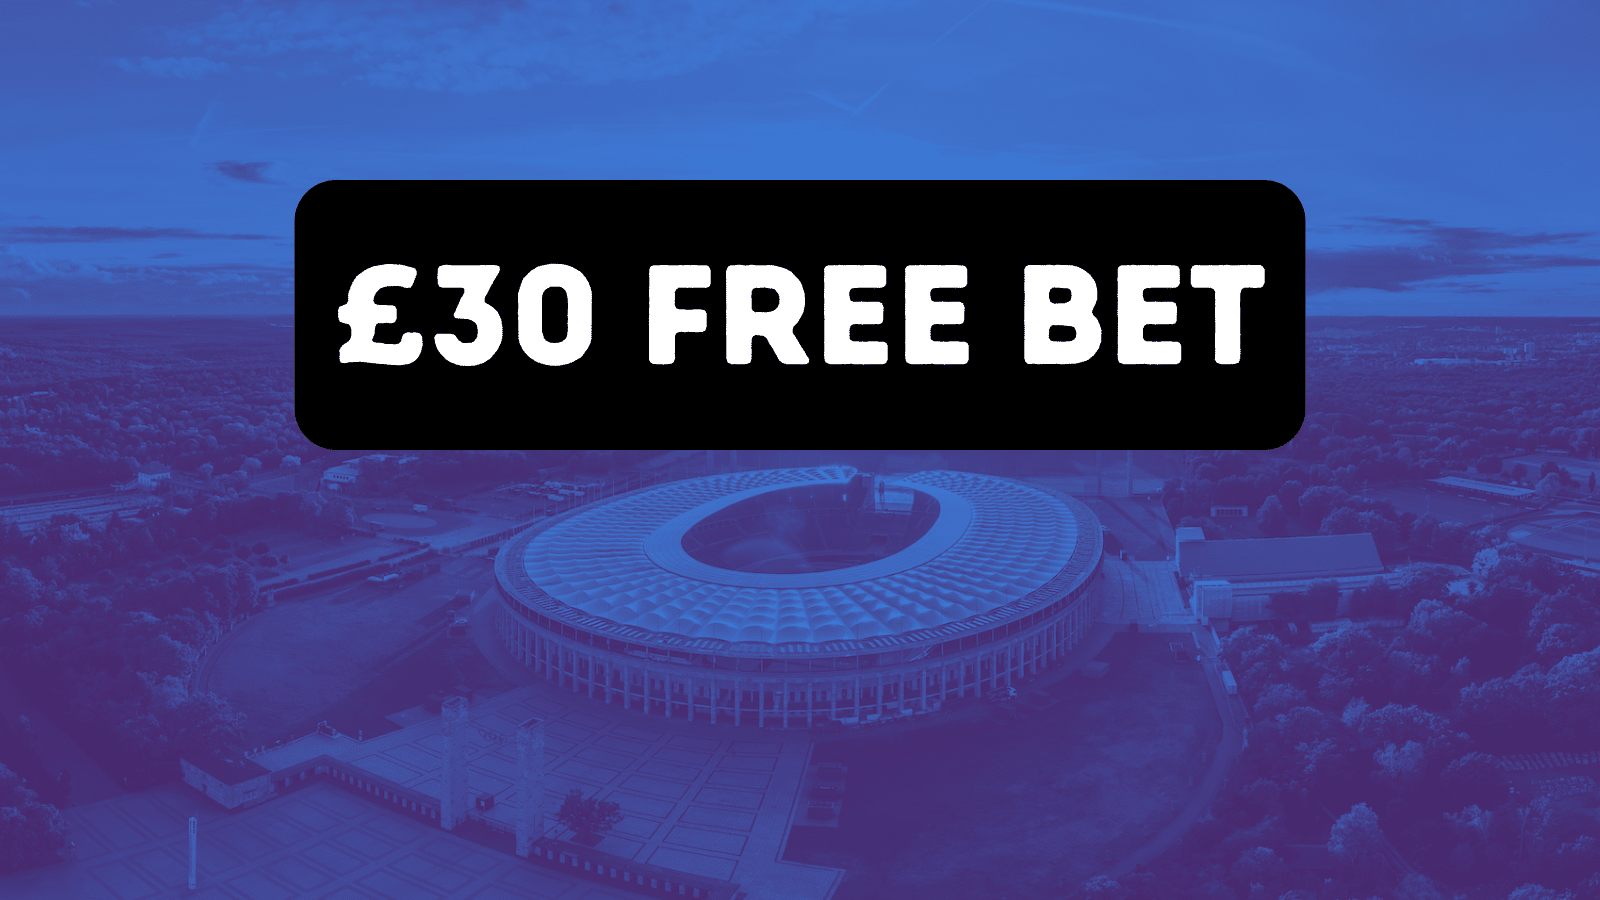 Euros £30 free bet offer